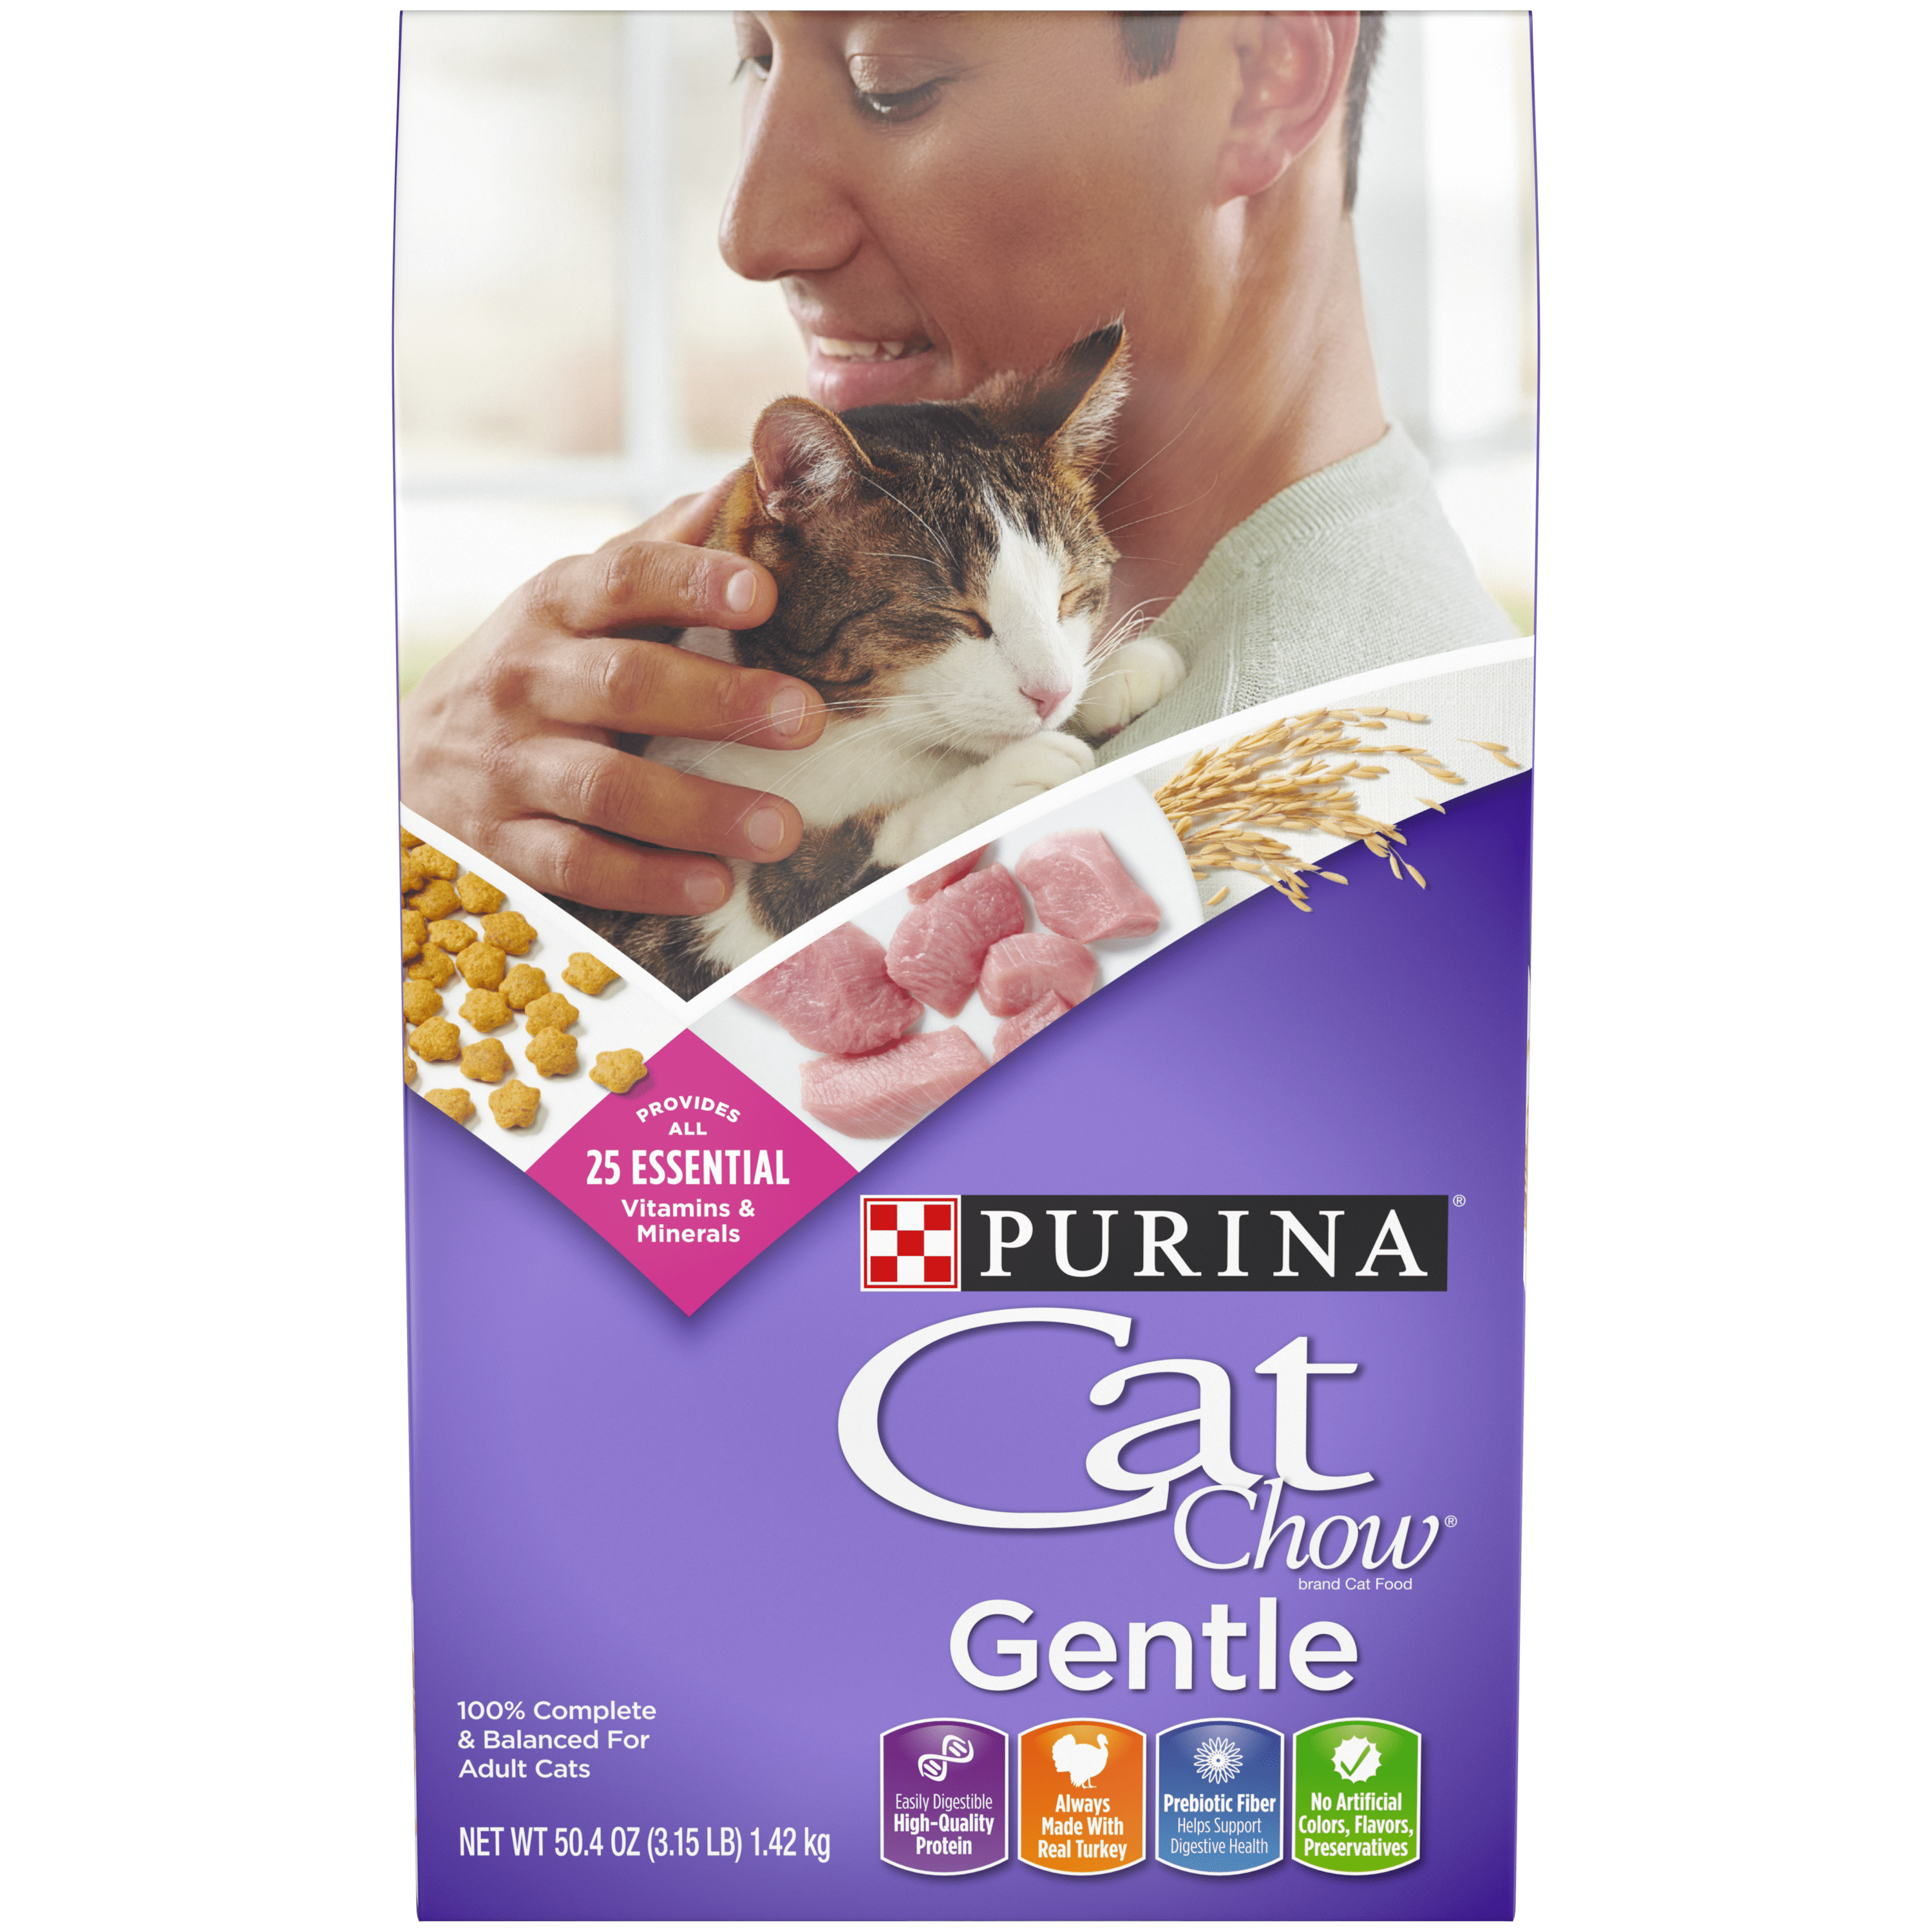 Purina Cat Chow Sensitive Stomach Dry Cat Food, Gentle, 3.15 lb. Bag